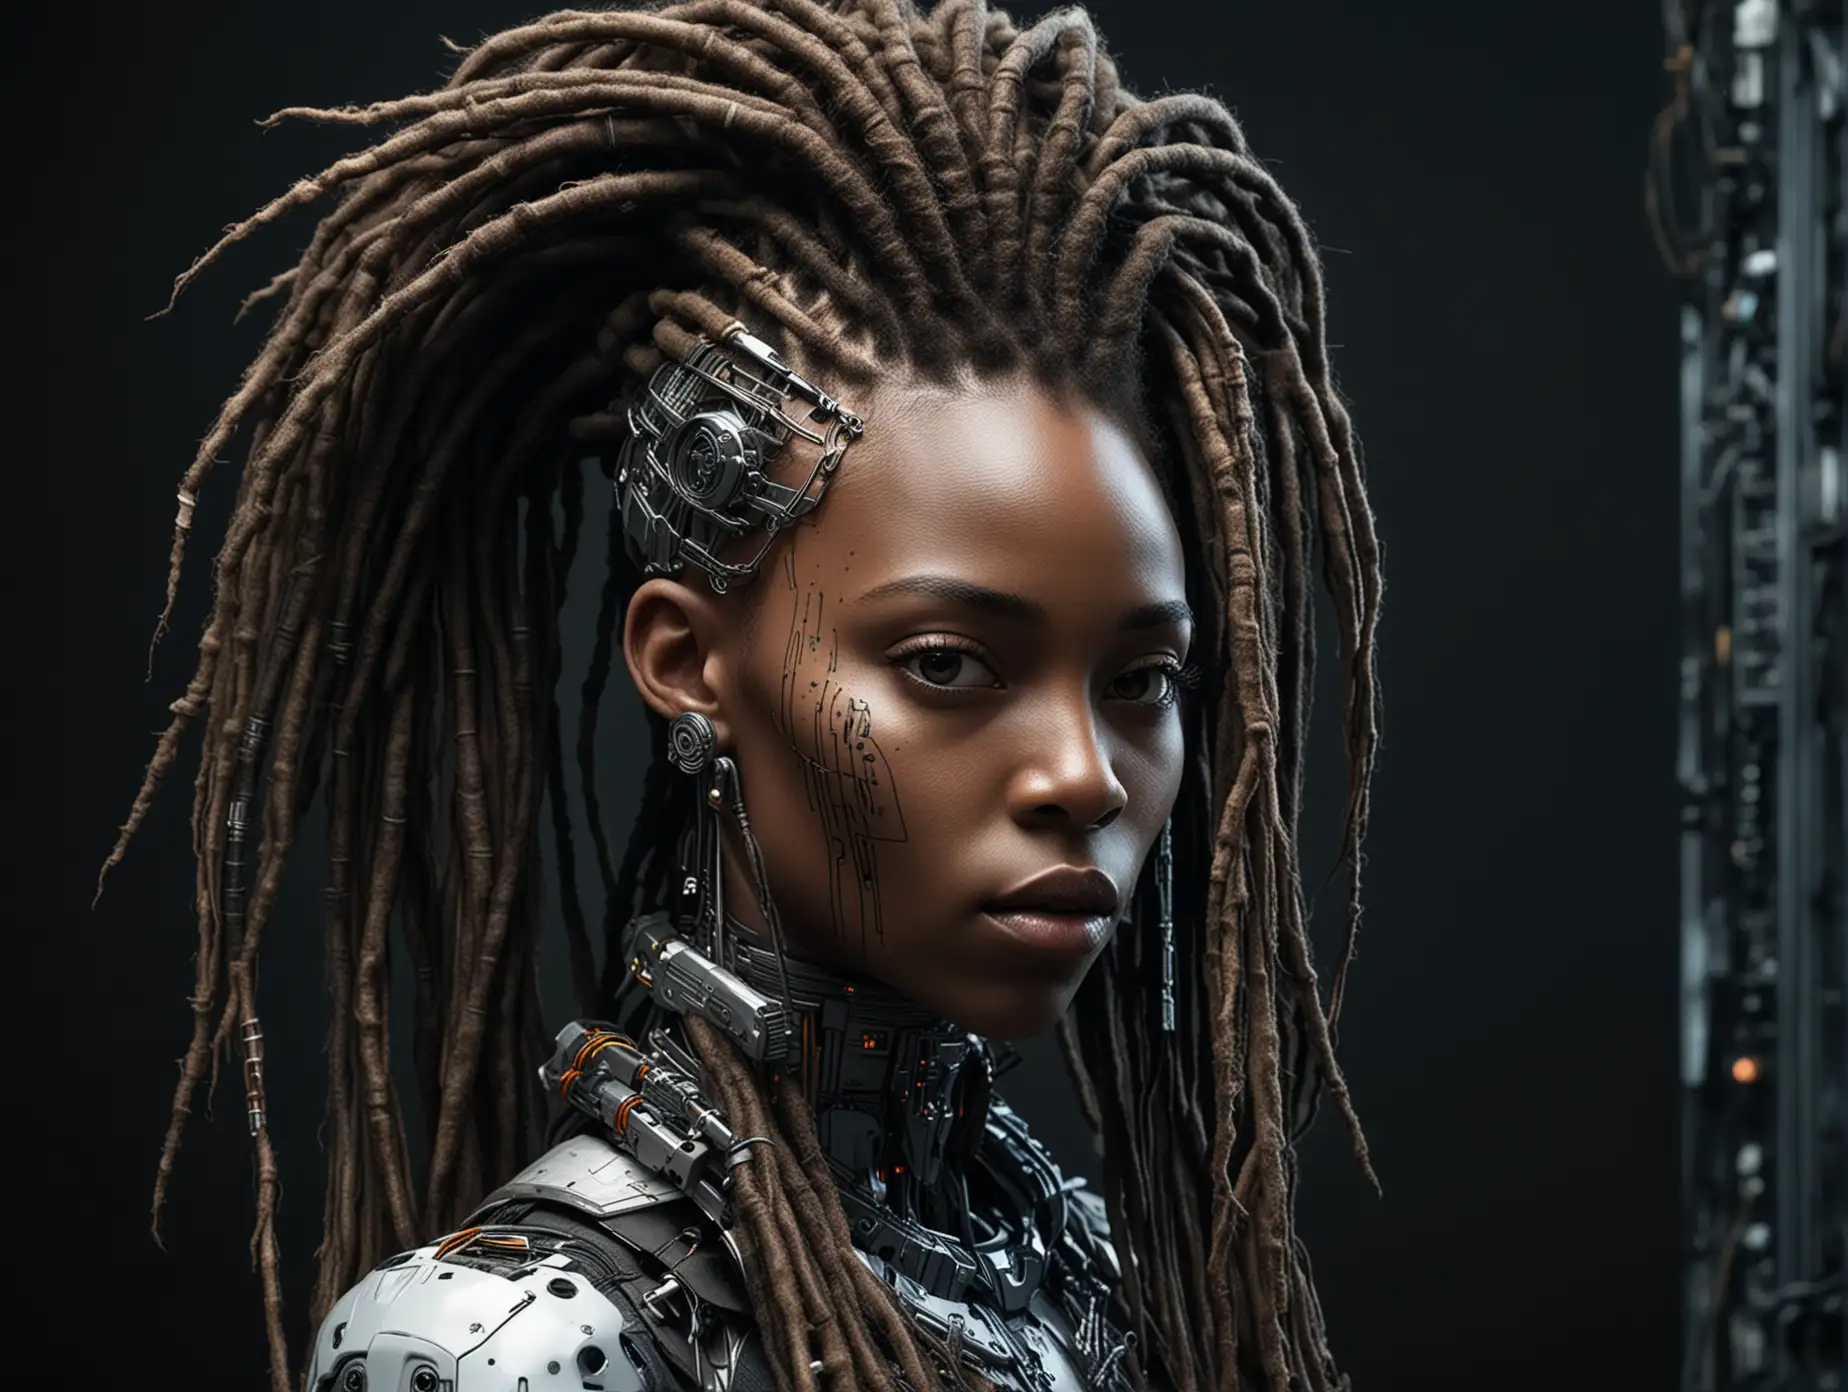 Futuristic-Cyborg-African-Portrait-with-Long-Bun-Dreadlocks-in-Black-SciFi-Background